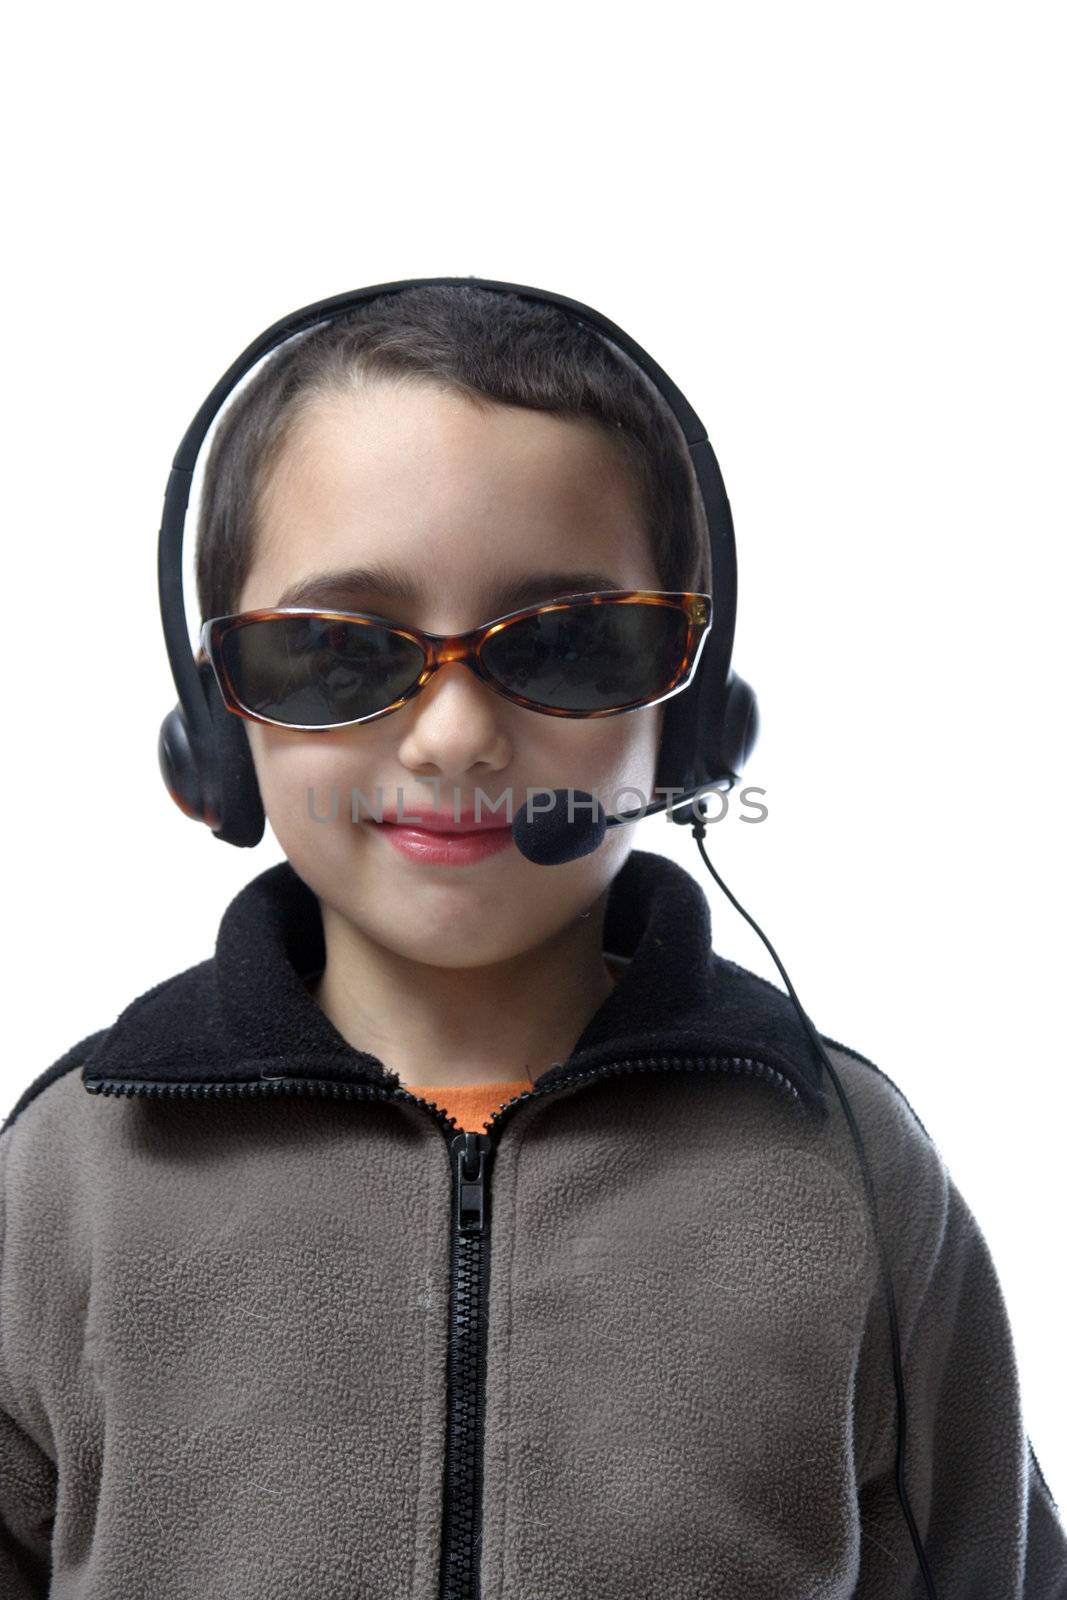 Smiling child wearing headset by jpcasais